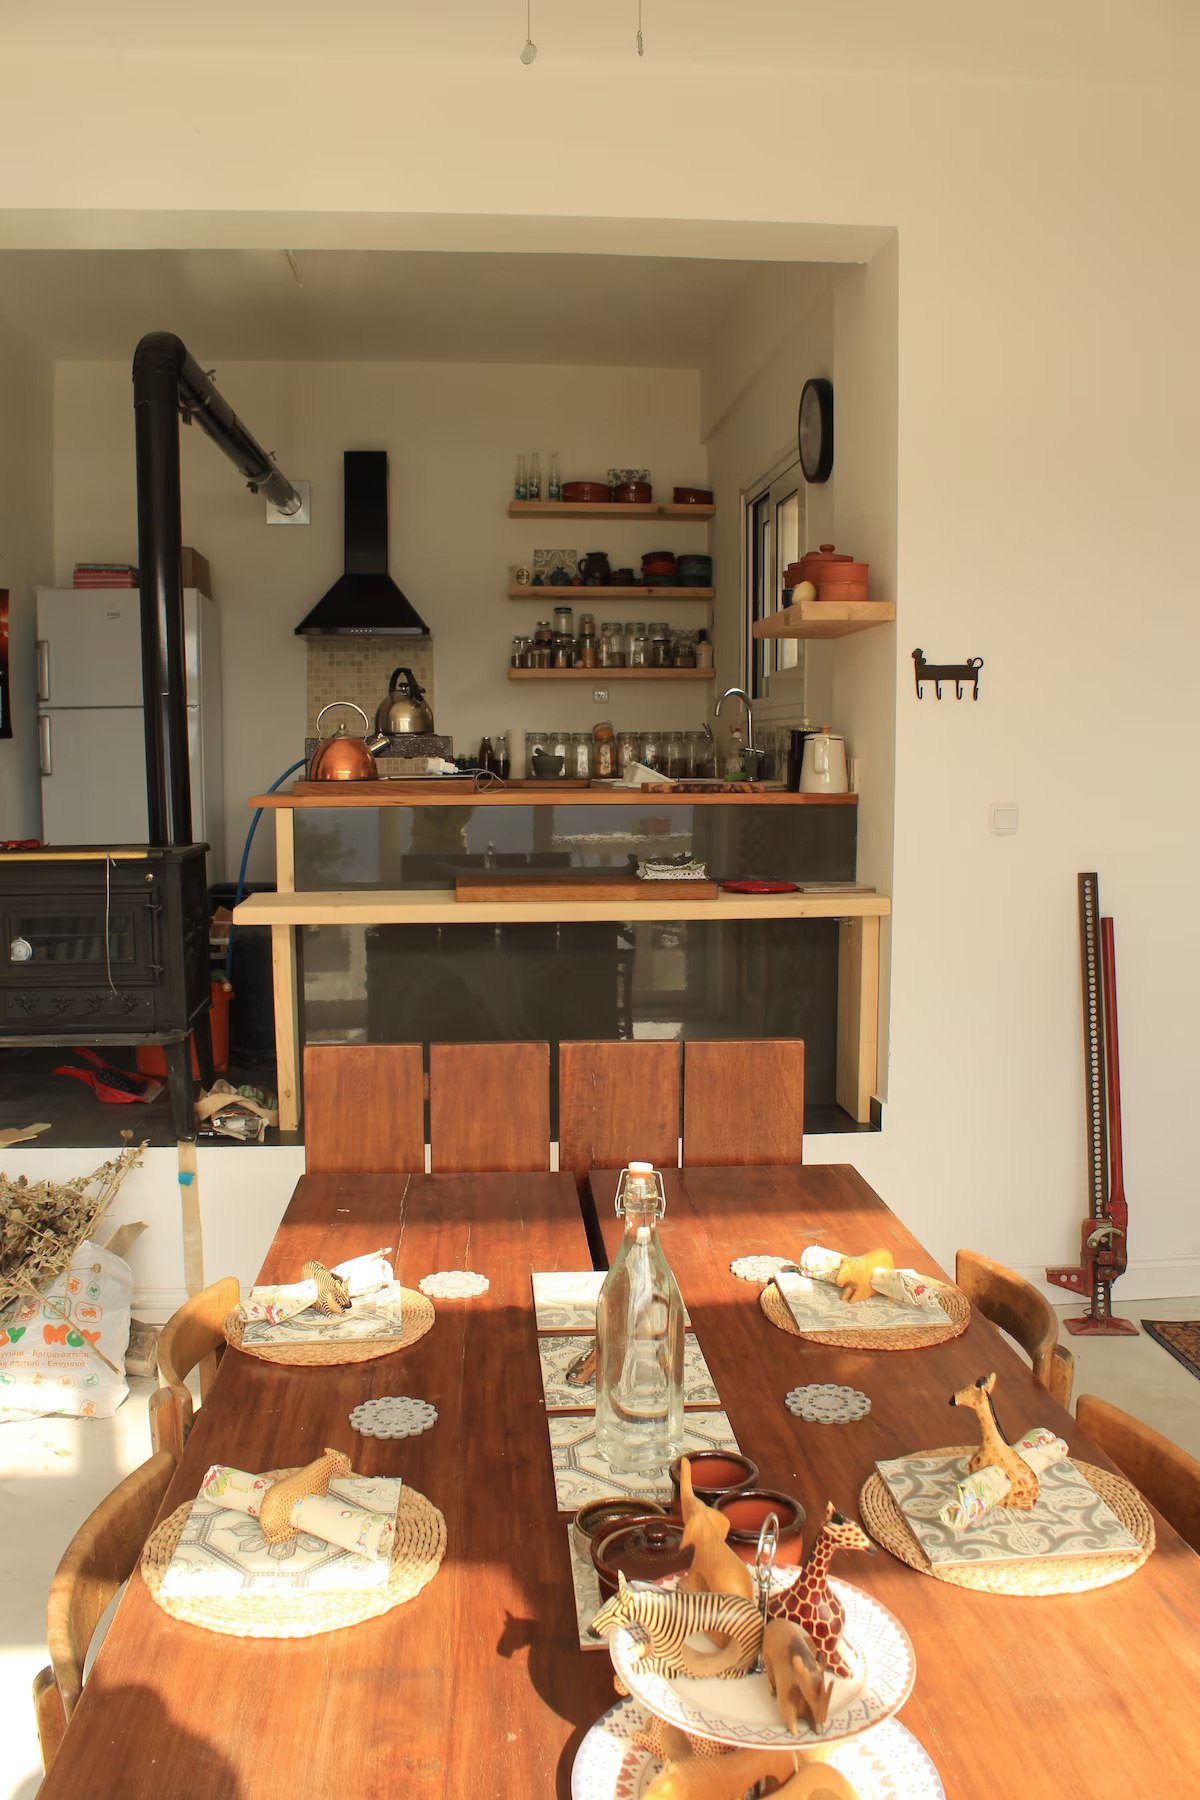 crete retreat house kitchen setting.jpg